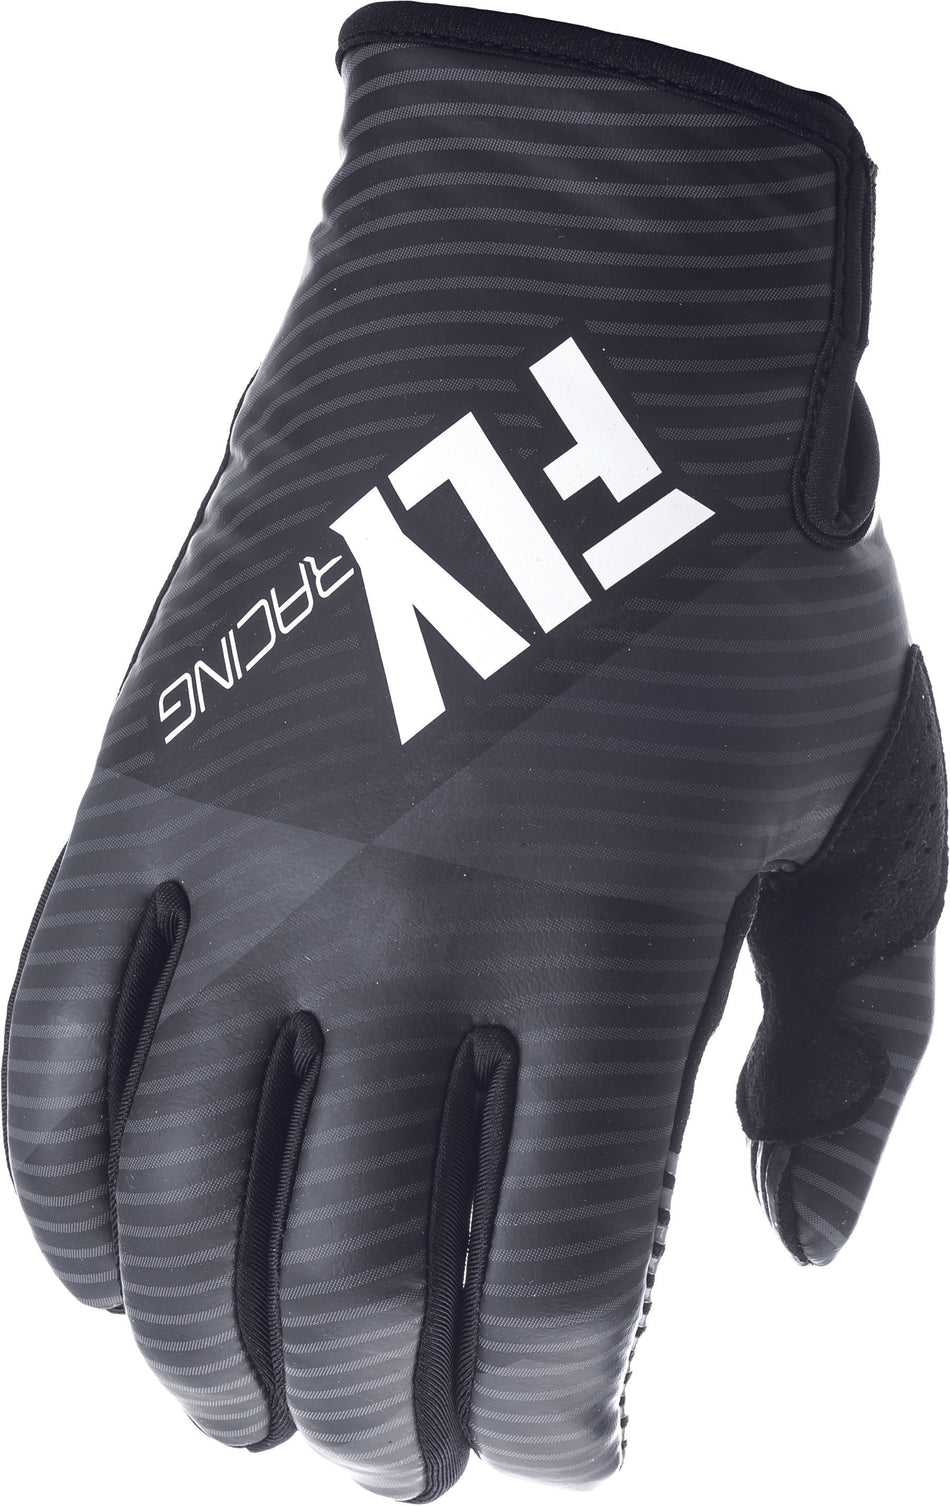 FLY RACING 907 Neoprene Gloves Black/Grey Sz 9 369-64009